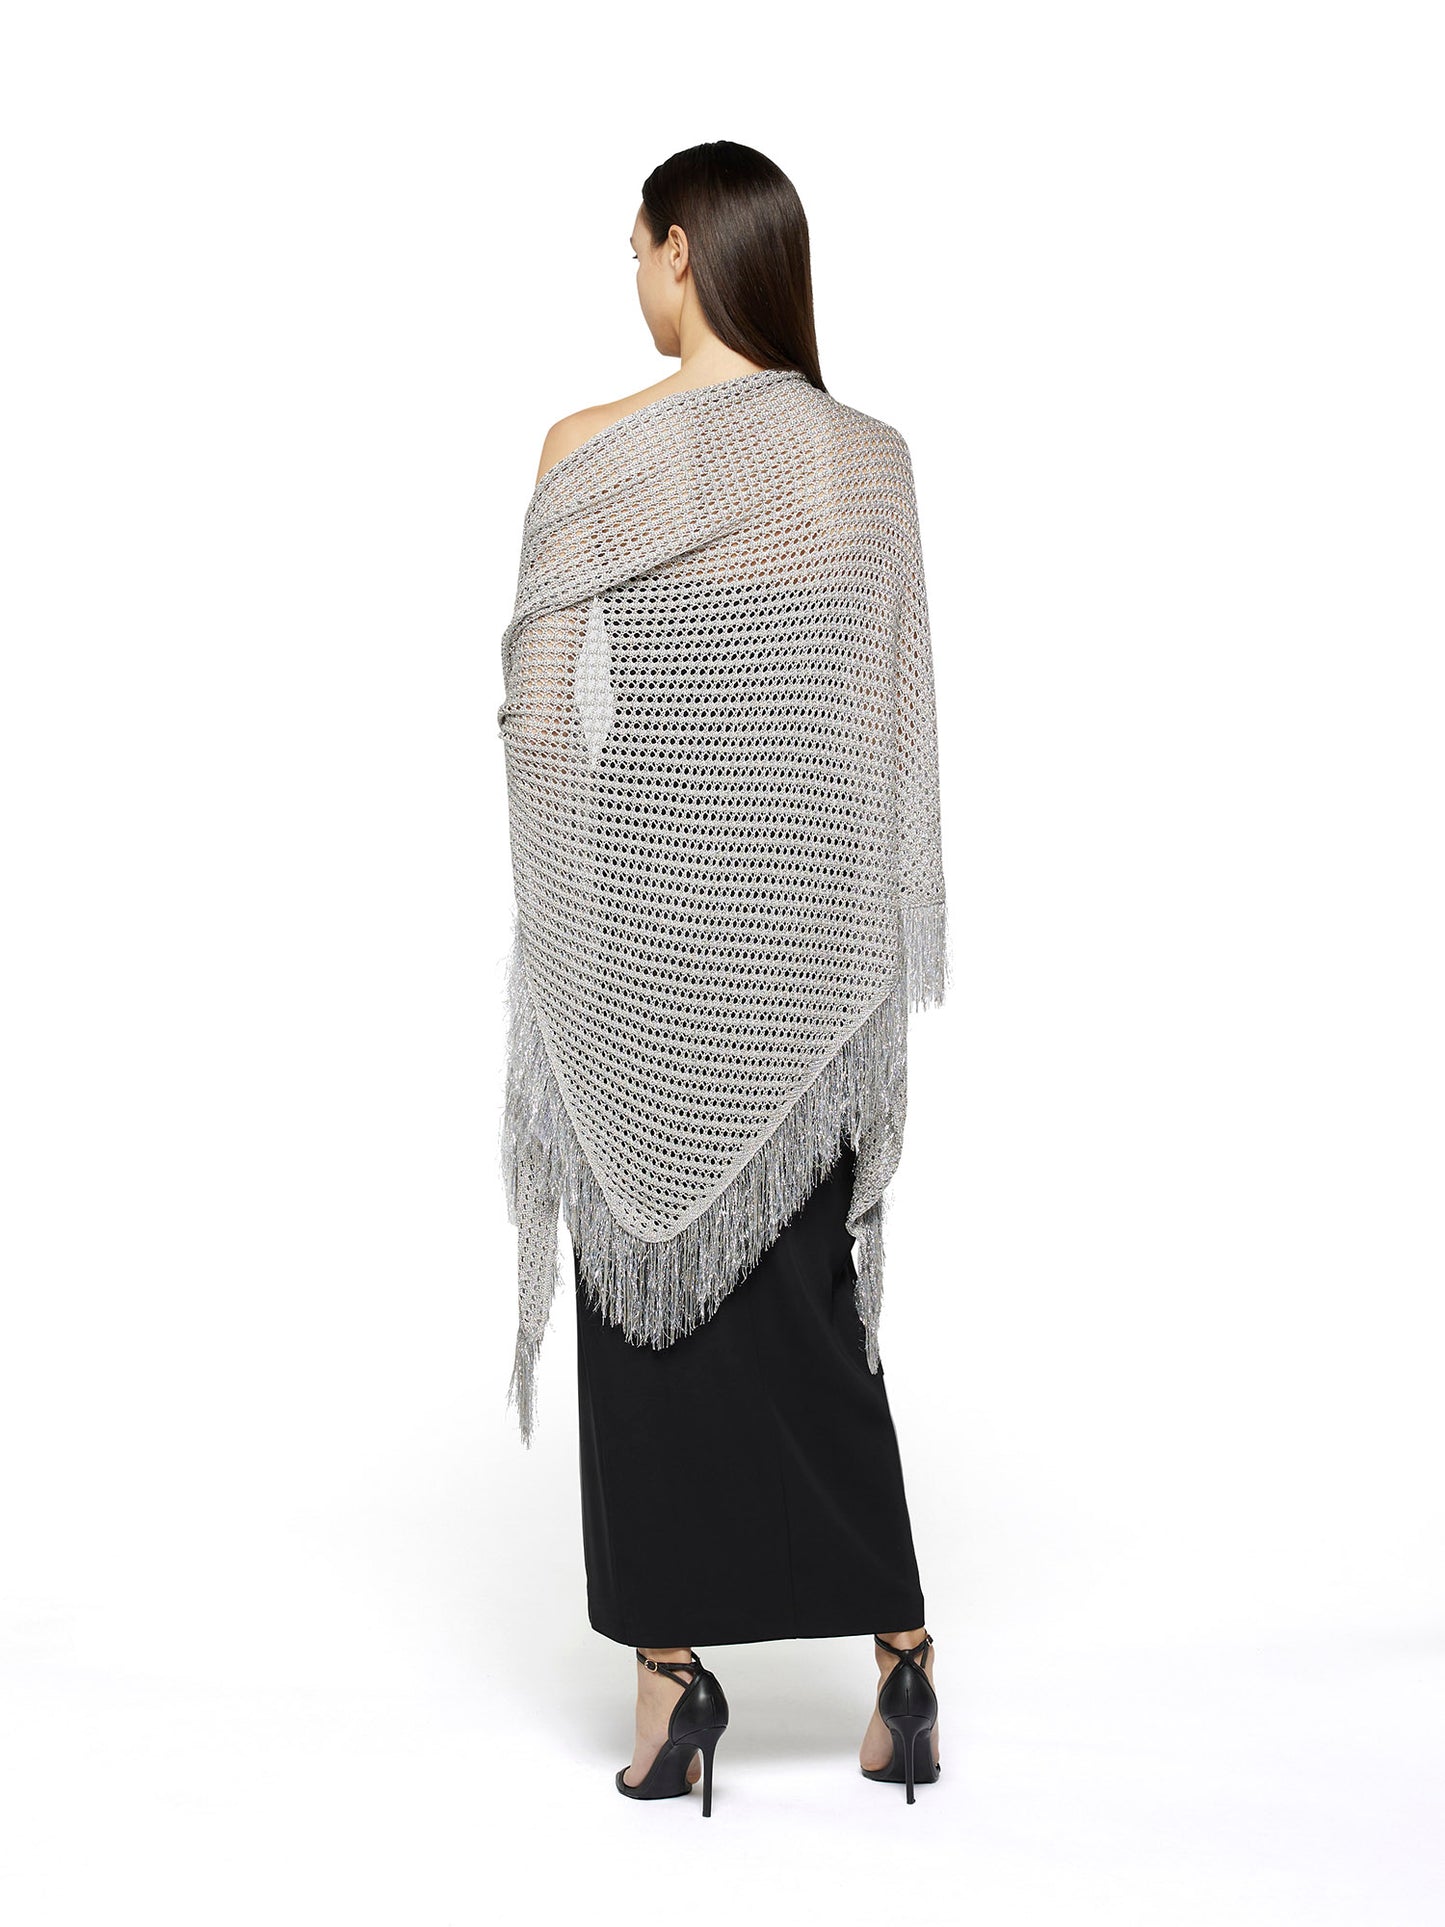 Lurex crochet shawl